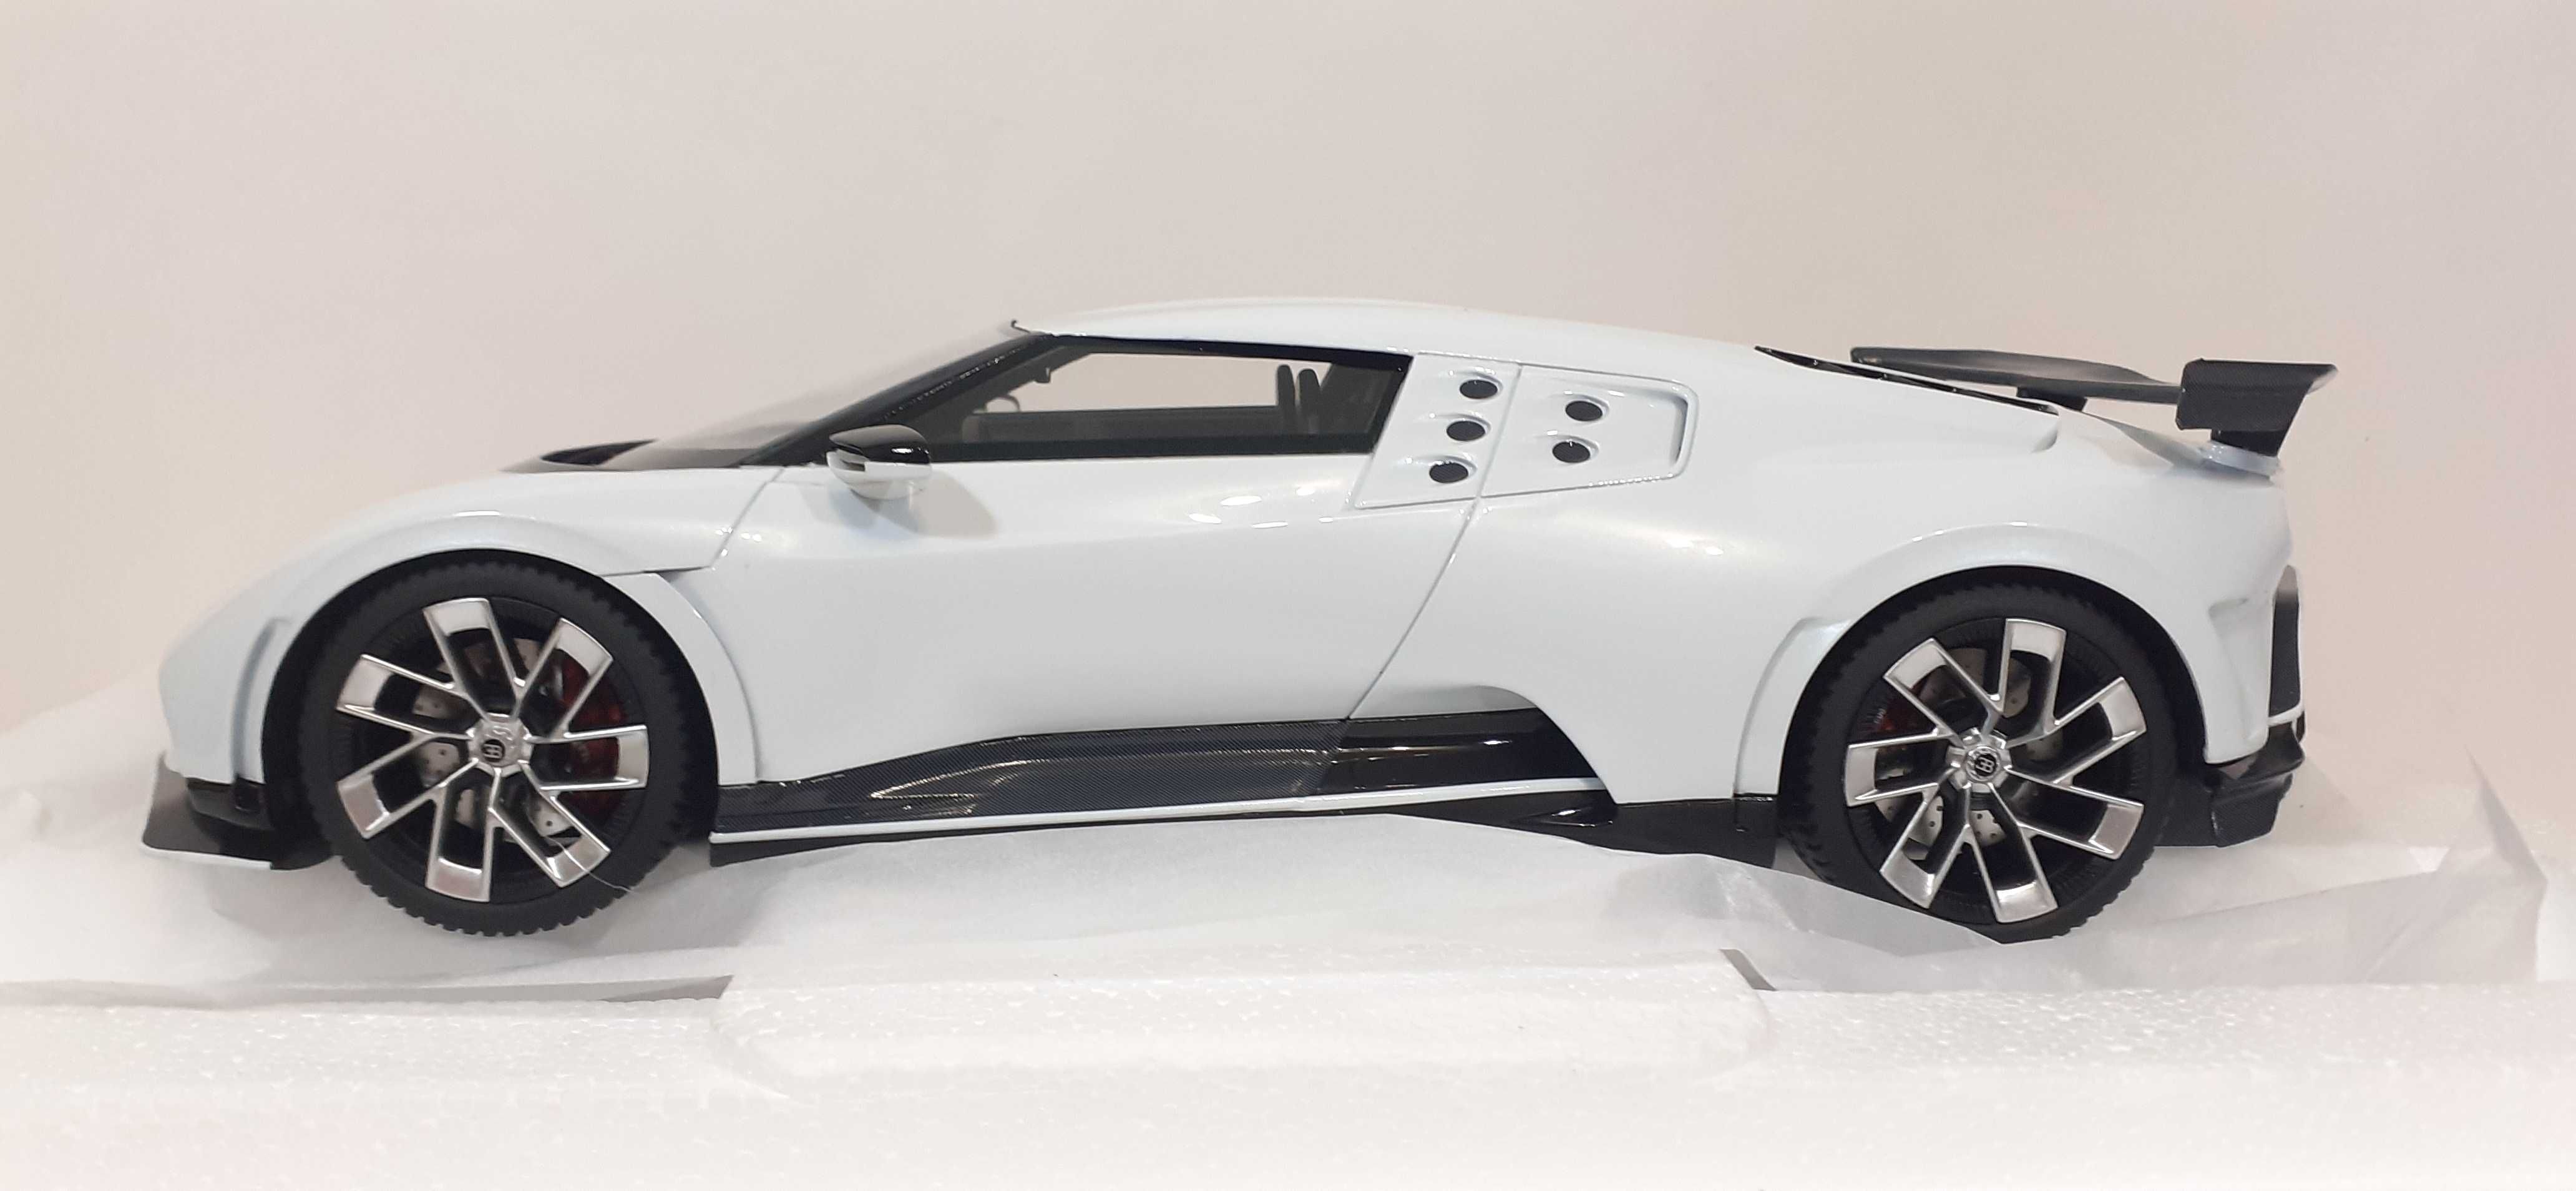 1/18 Bugatti Centodieci - Top Speed